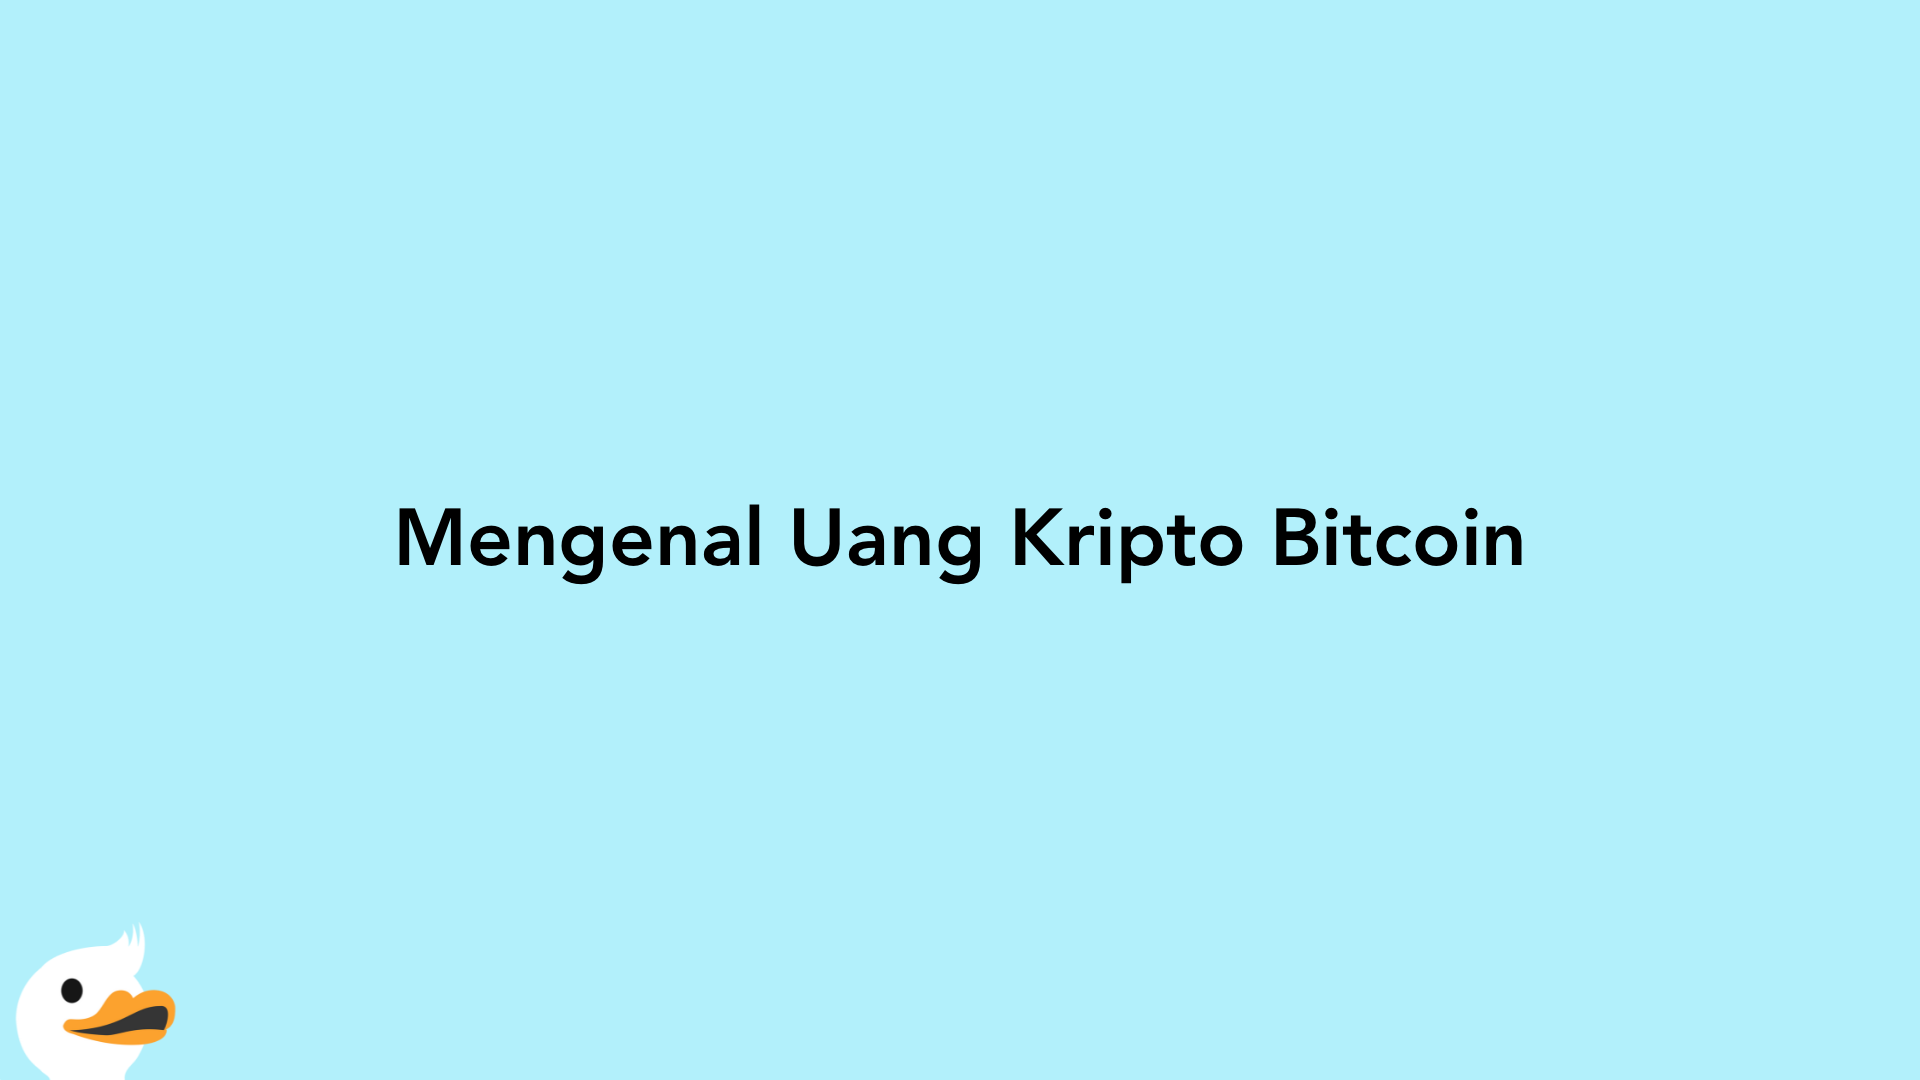 Mengenal Uang Kripto Bitcoin